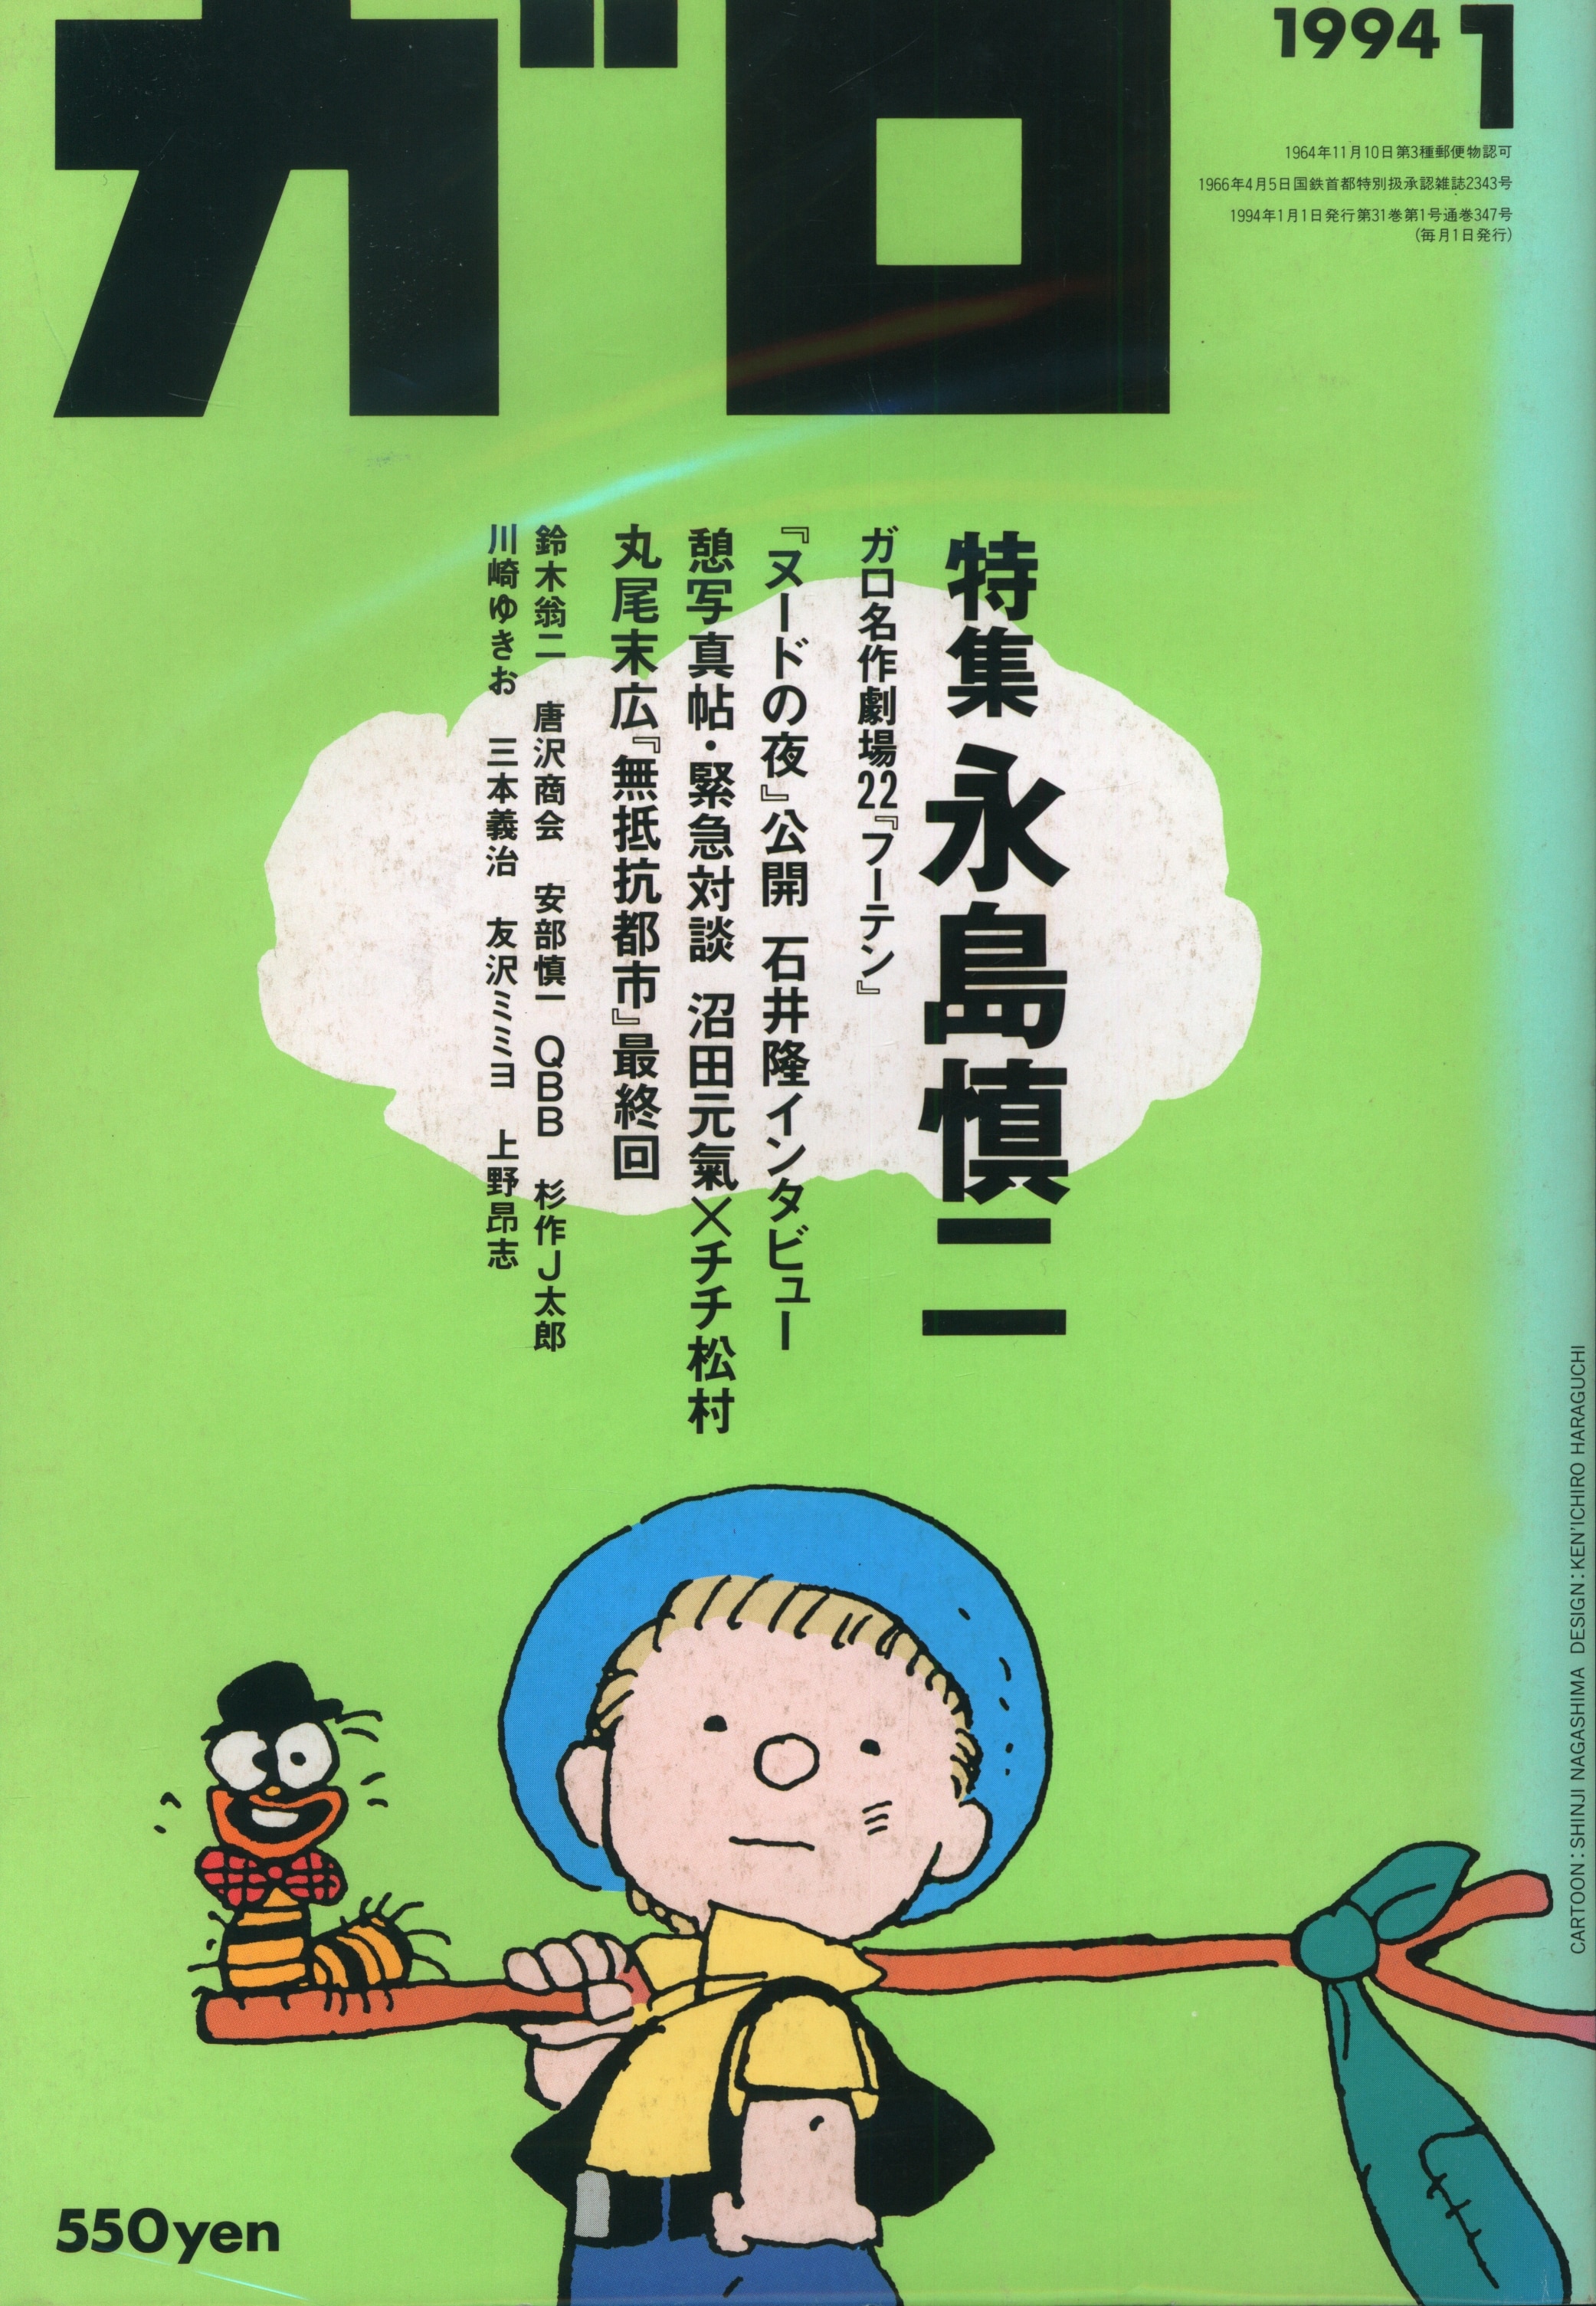 ガロ 青林堂 漫画雑誌 1988年1989年 - 青年漫画